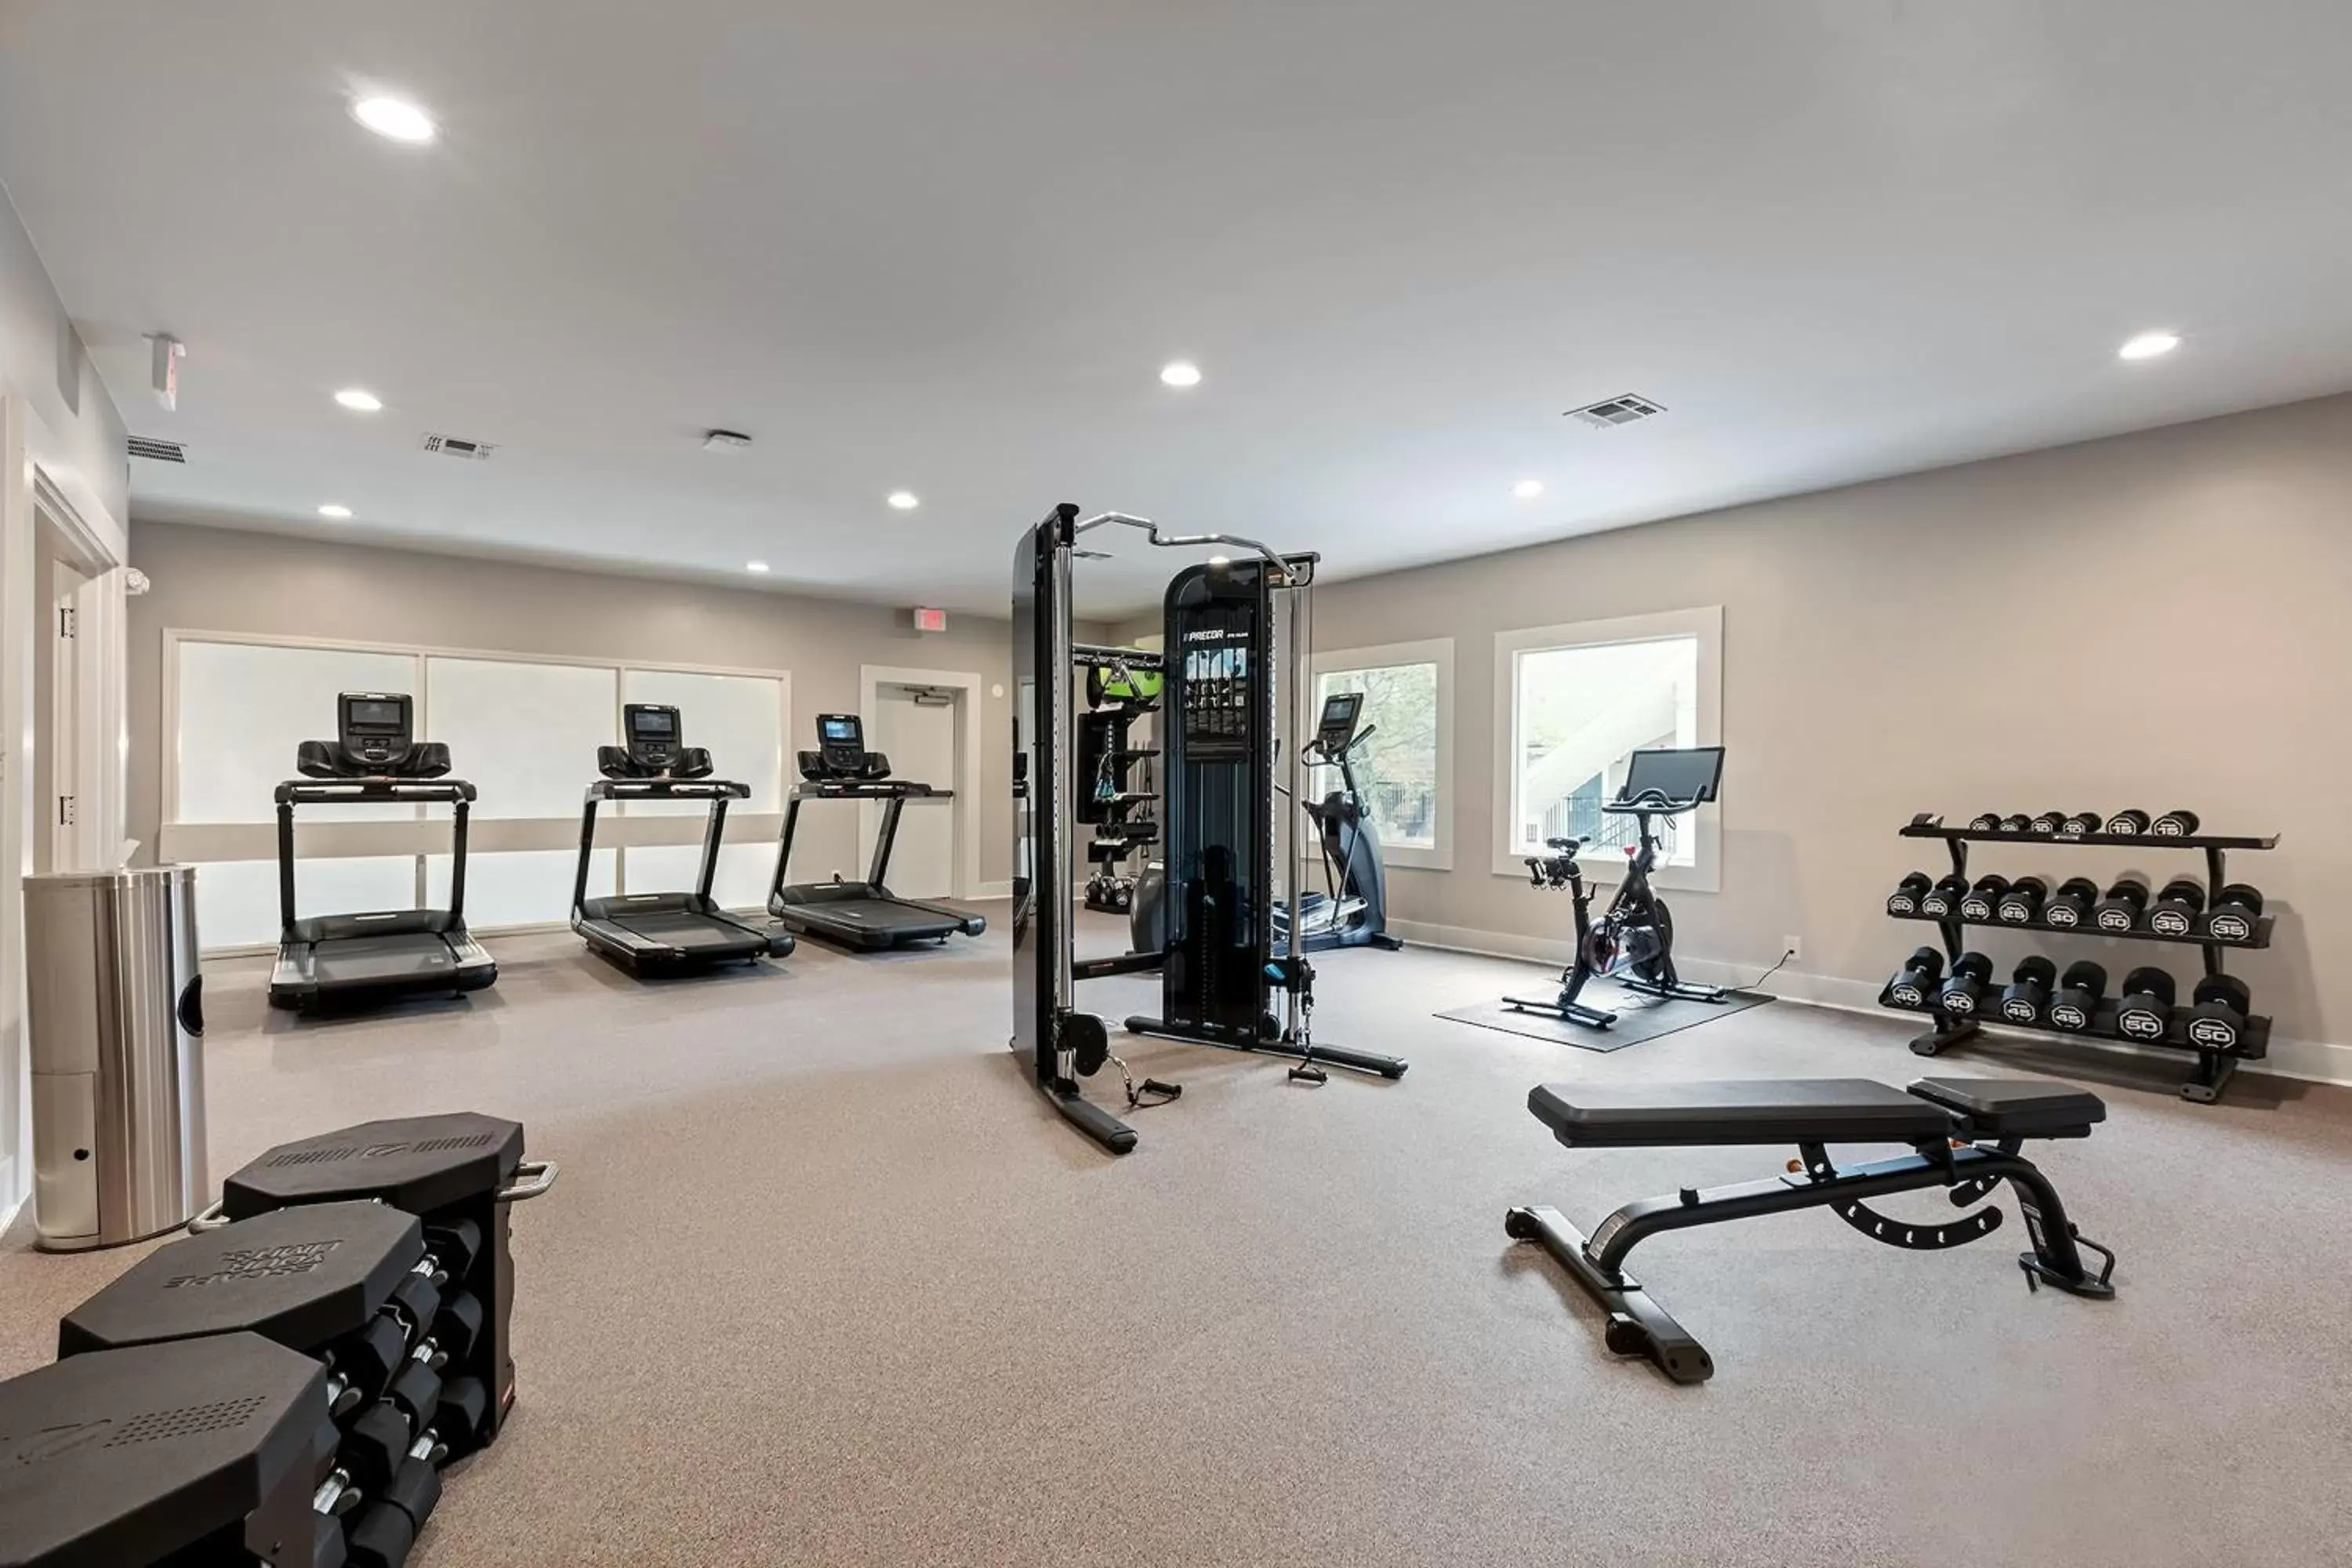 Fitness centre/facilities, Fitness Center/Facilities in WaterWalk Atlanta Perimeter Center